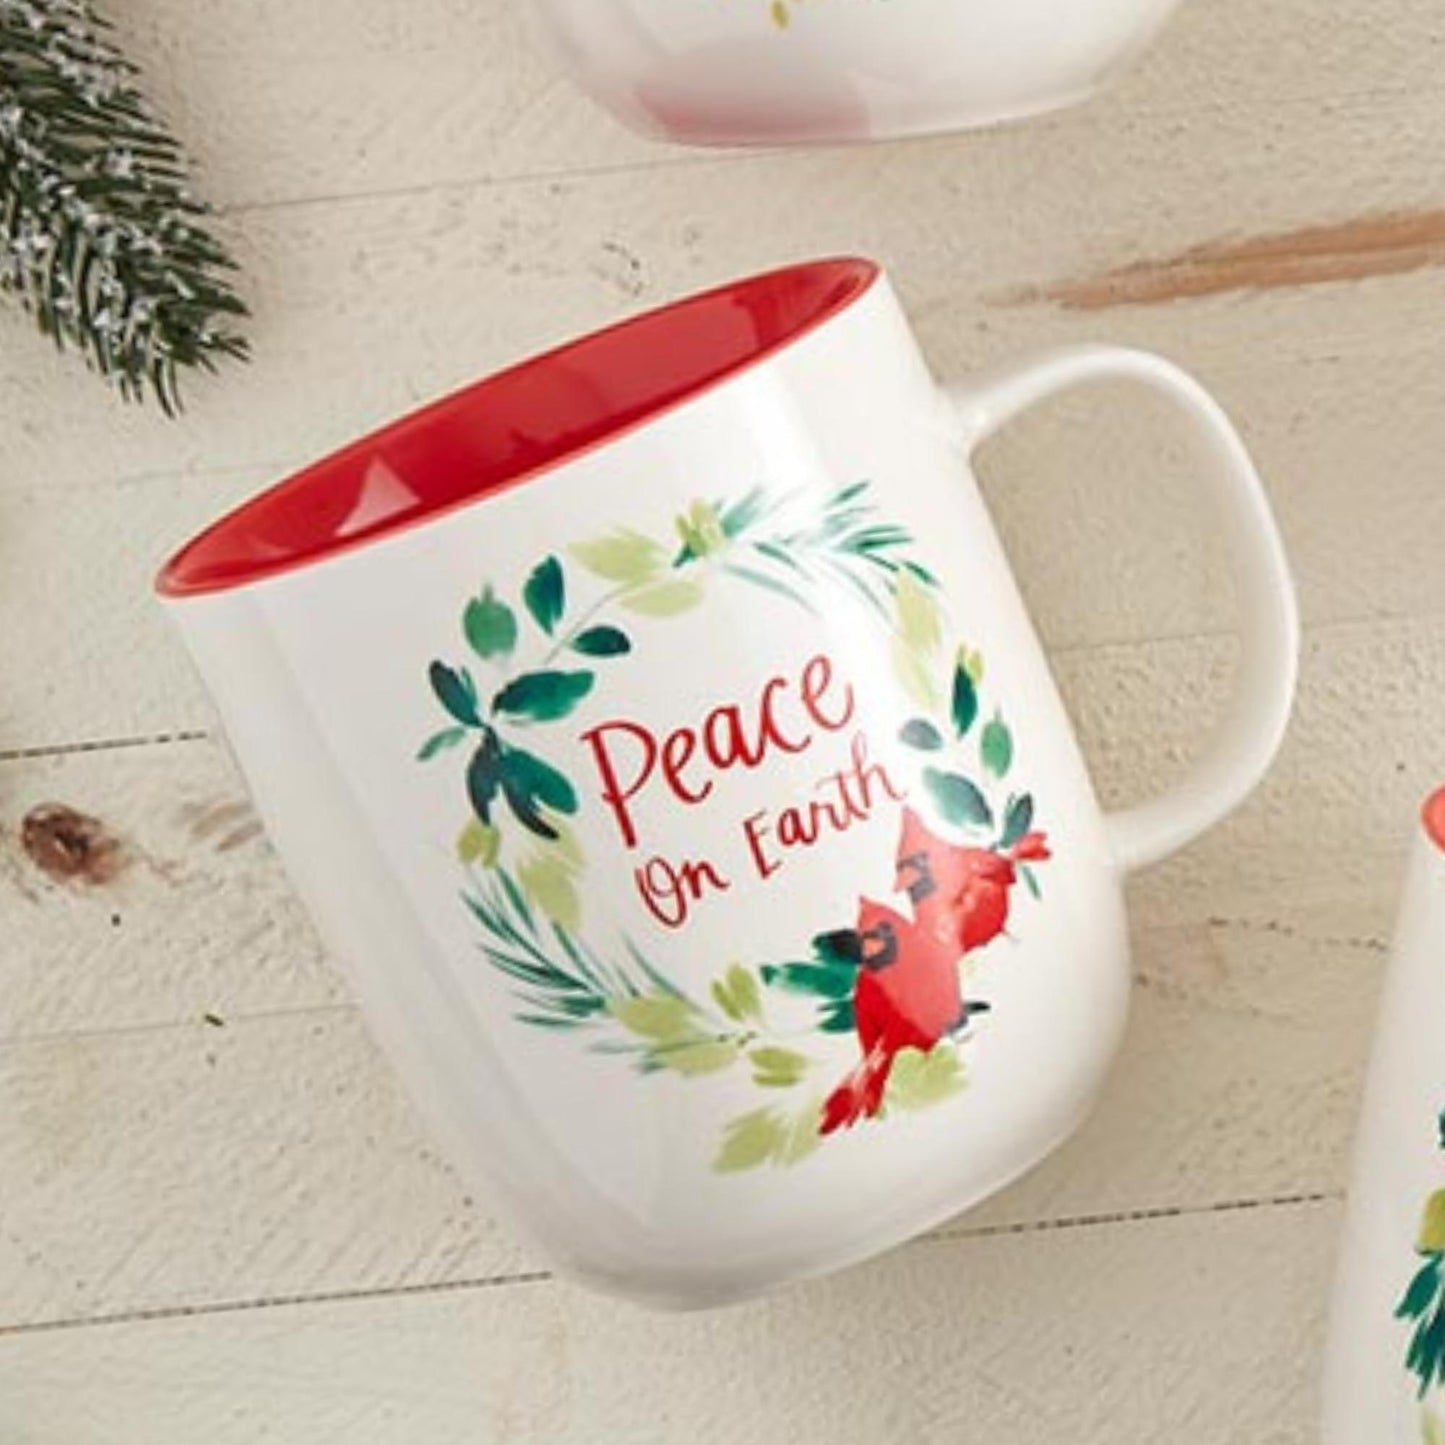 Vintage Style Christmas Mug - Peace on Earth Holiday Drinkware | oak7west.com